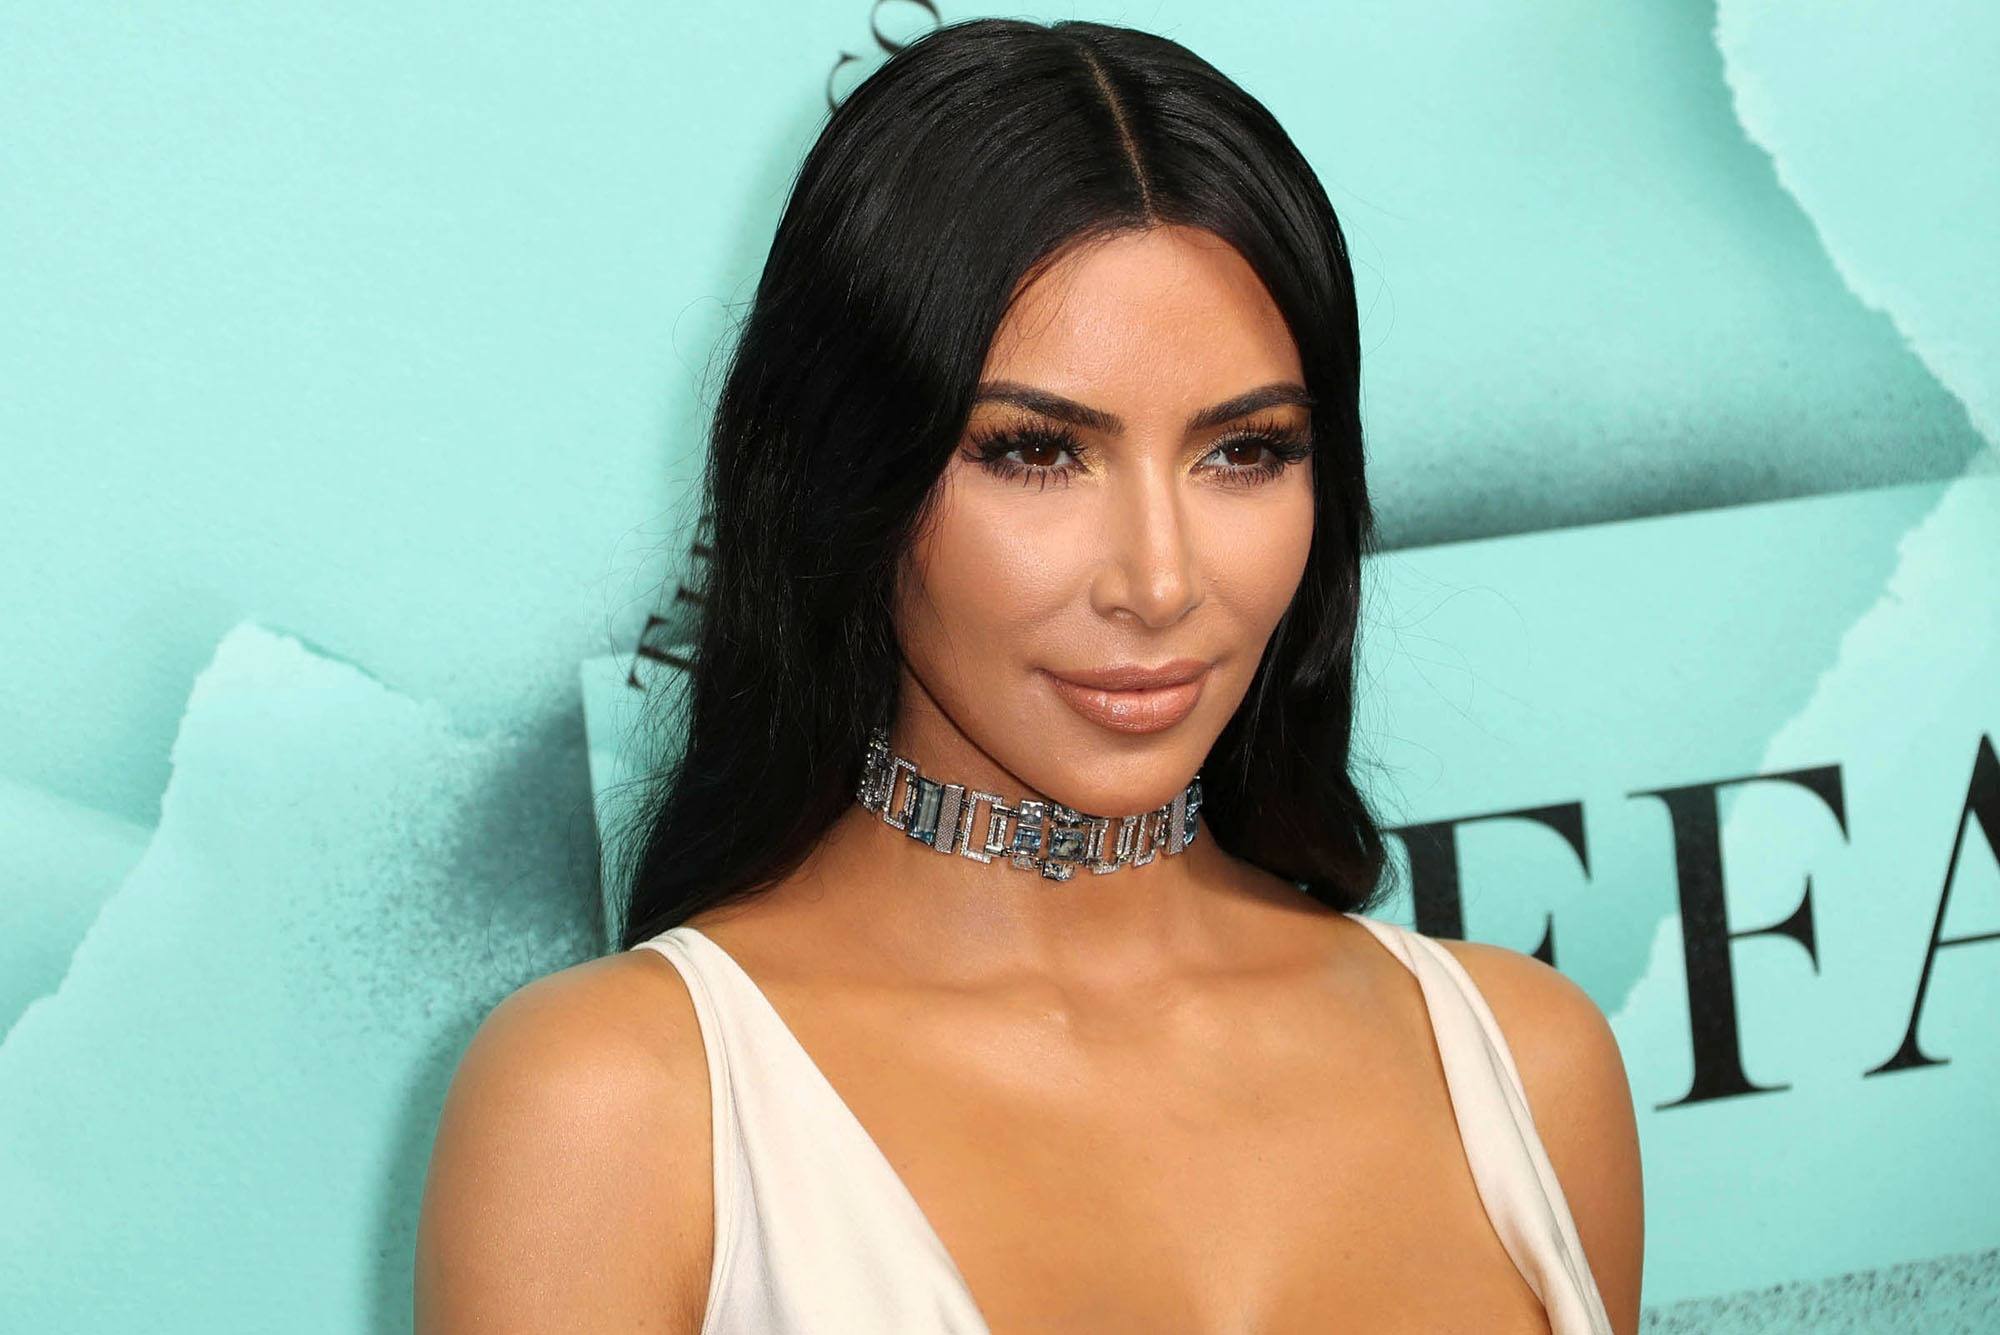 Kim Kardashian vende bolsos usados y manchados por internet